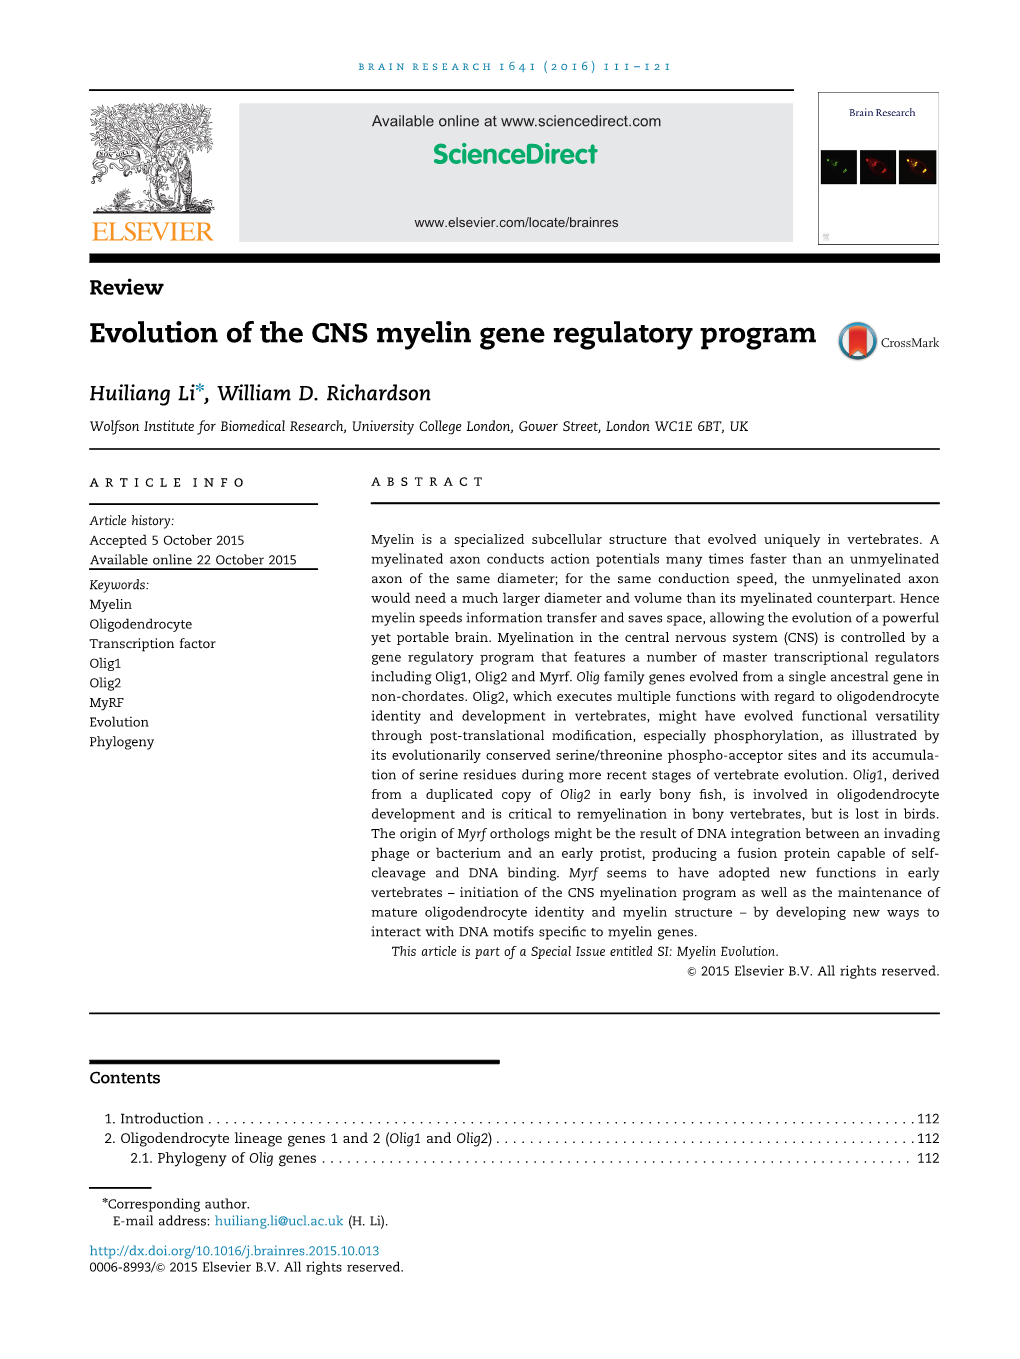 Evolution of the CNS Myelin Gene Regulatory Program